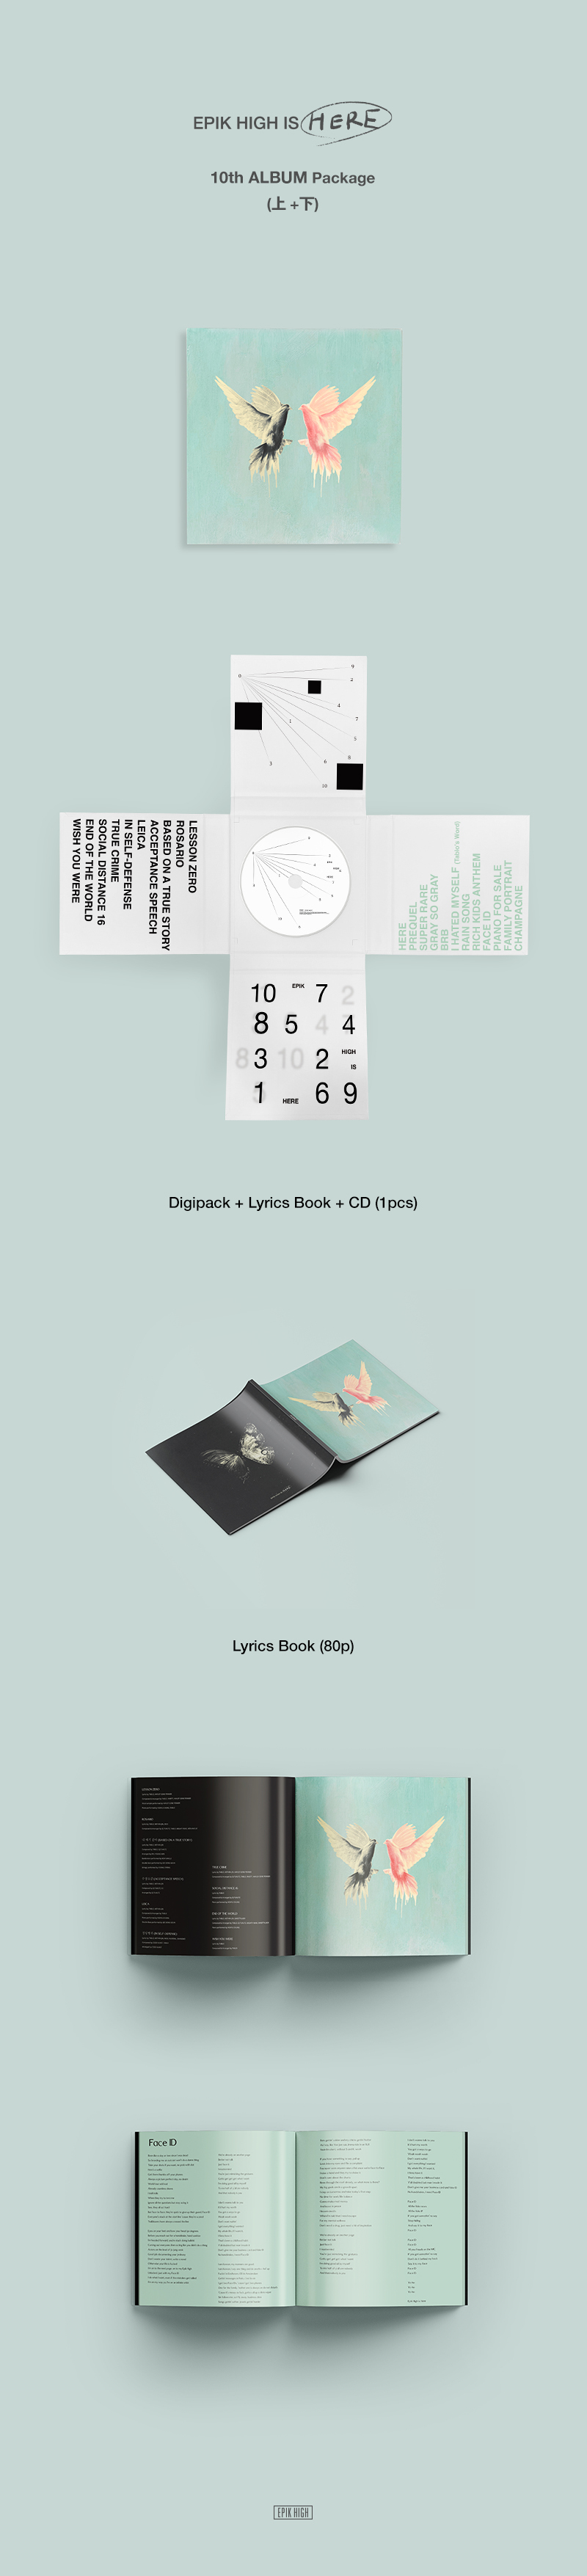 Epik High - 10th Full Album Package [Epik High is Here] EpikHigh EpikHighalbum EpikHighcd Epik HighisHERE album cd